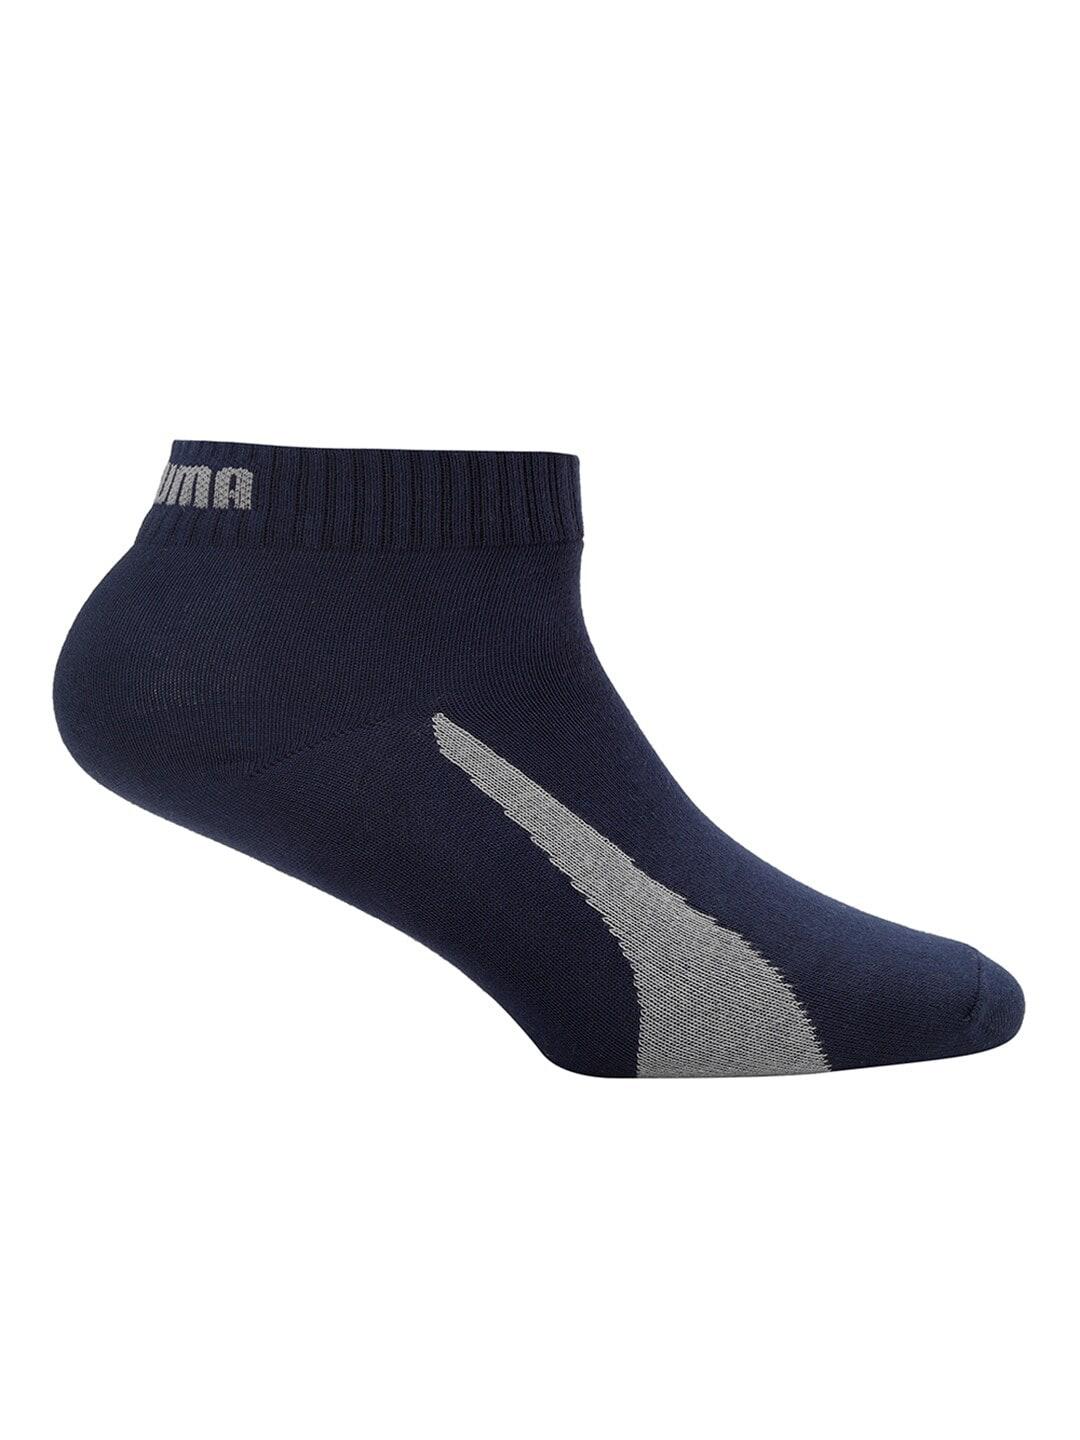 puma-navy-blue-ankle-length-socks